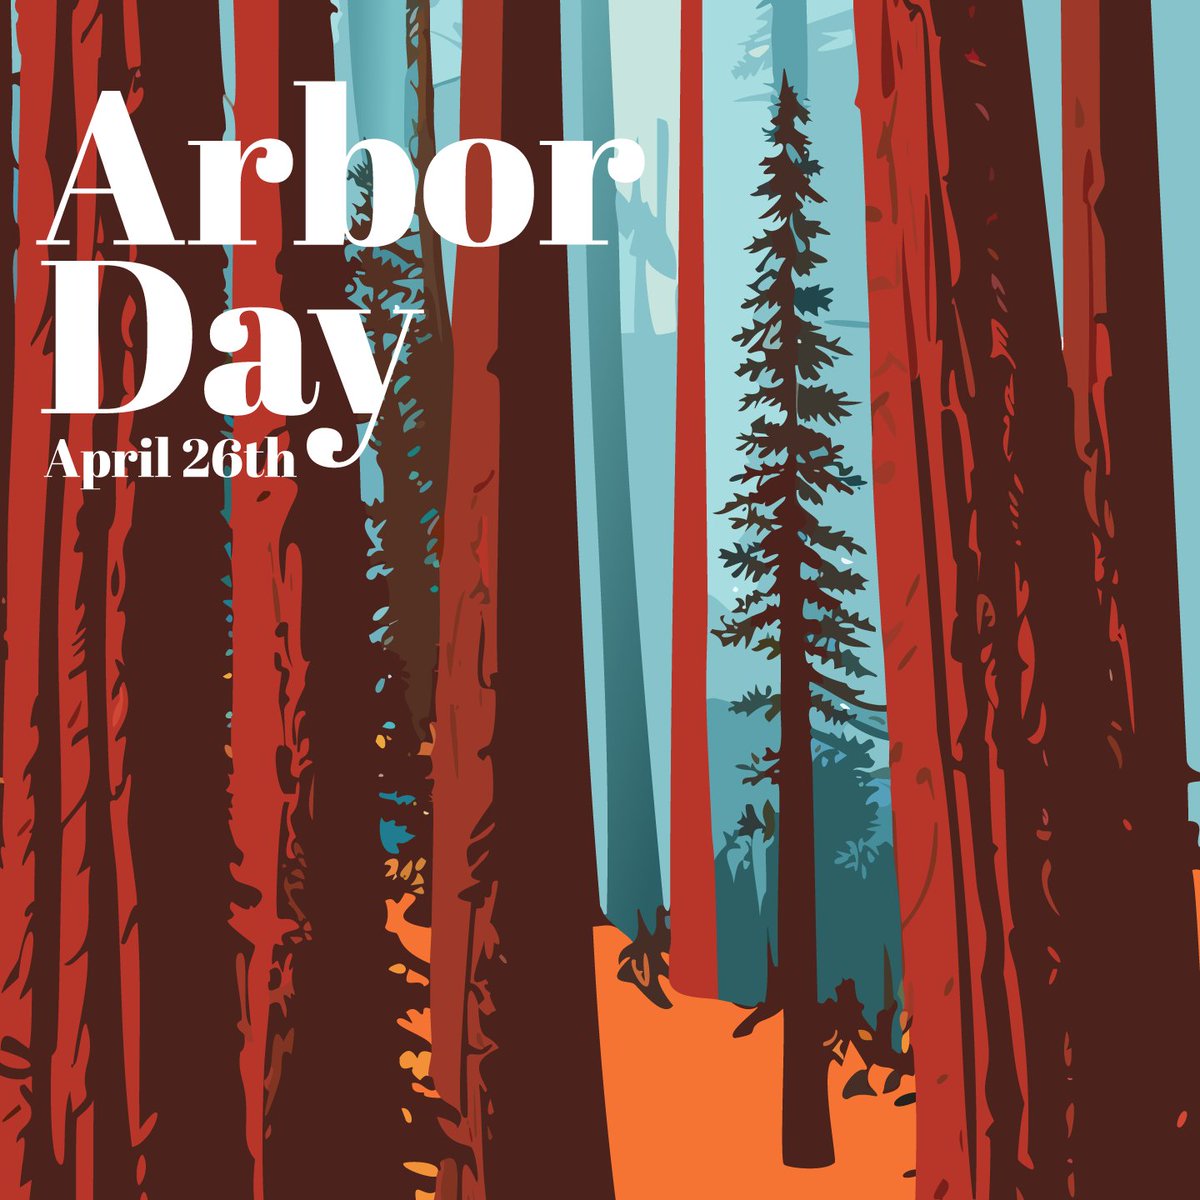 Happy Arbor Day!

#hudsoncounty #ArborDay